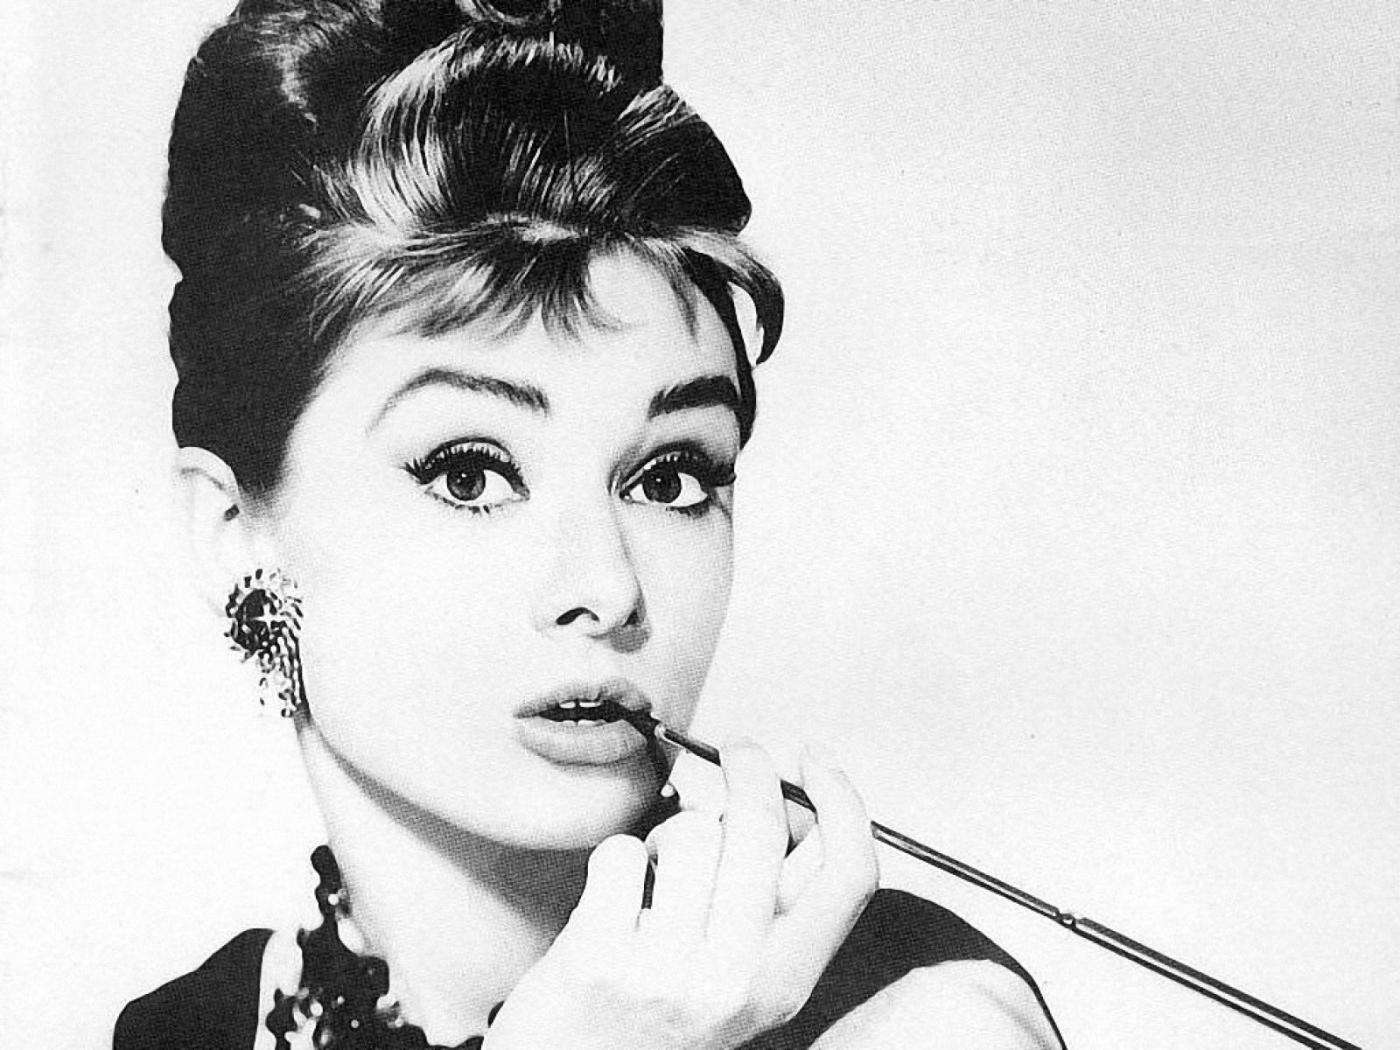 Oroscopo marzo 2014 - Toro Audrey Hepburn 1929